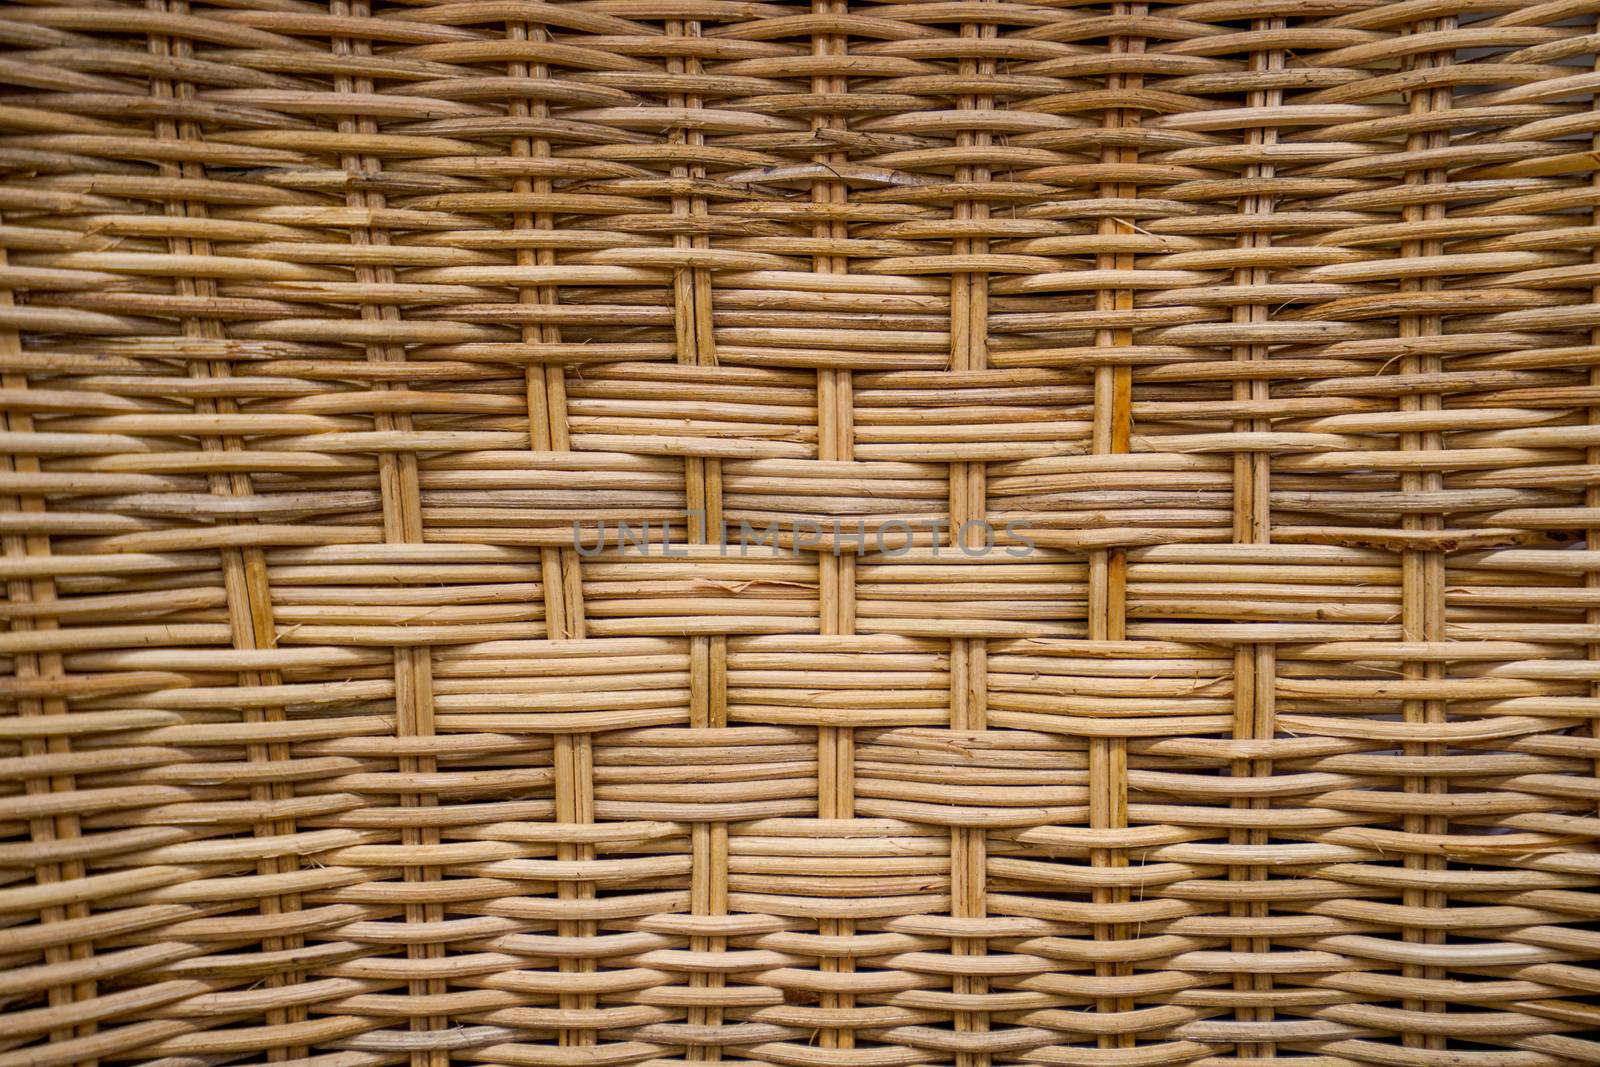 woven rattan patterns